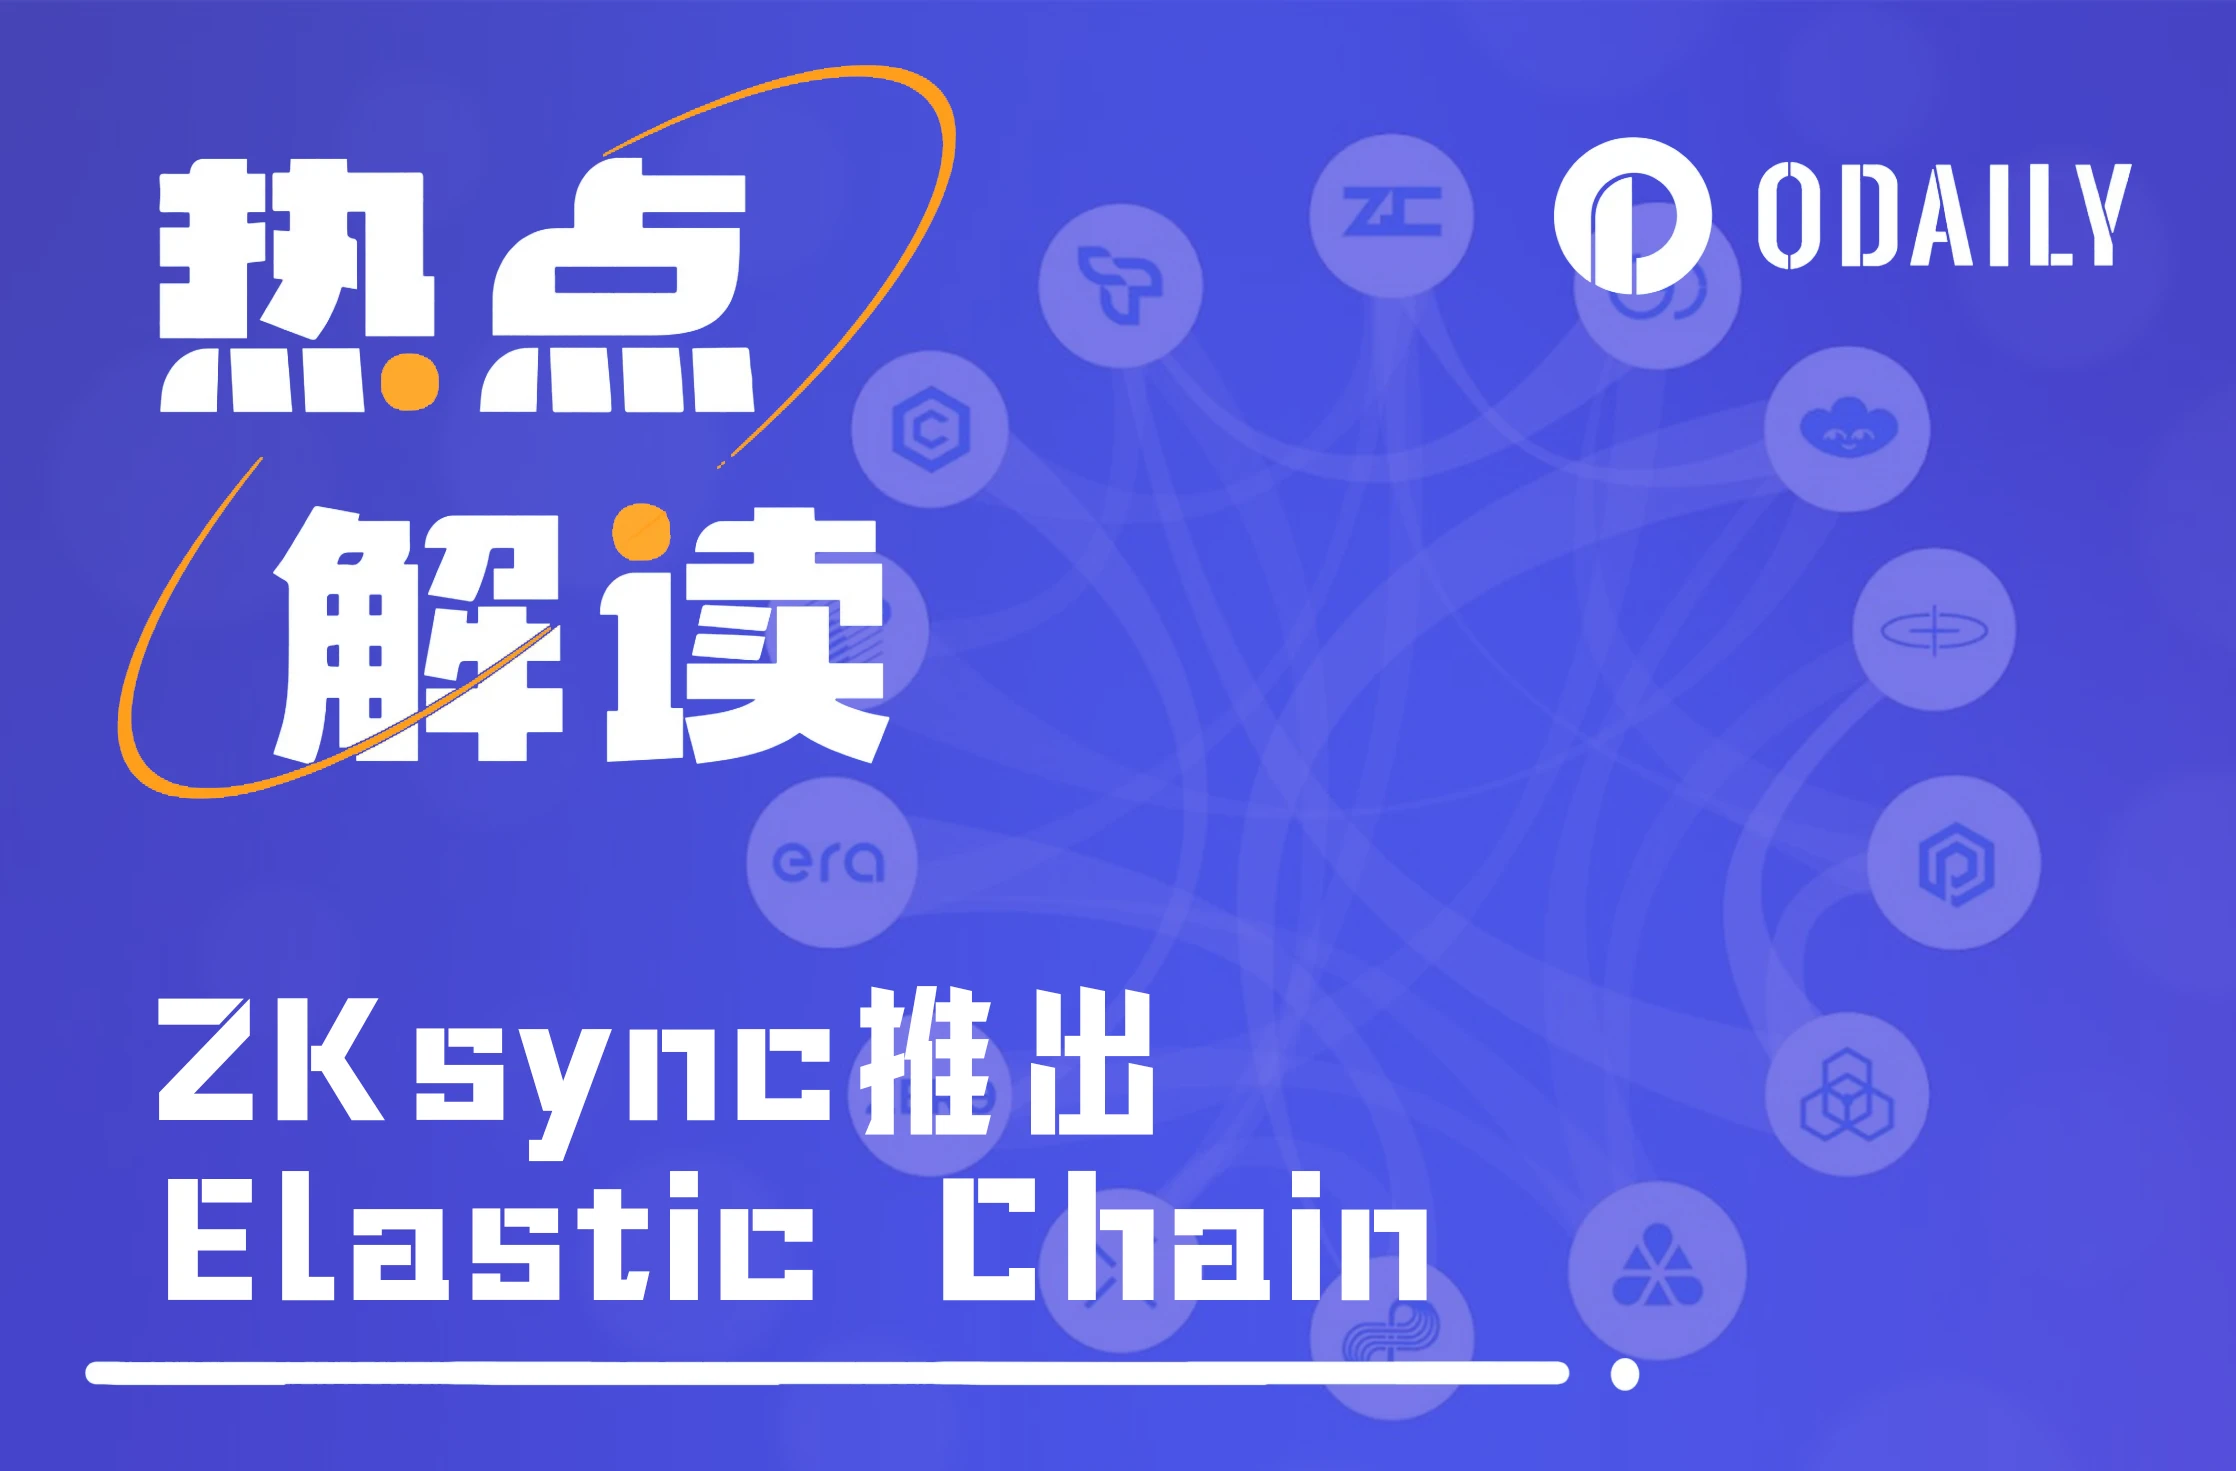 ZKsync推出Elastic Chain：引领区块链新时代？